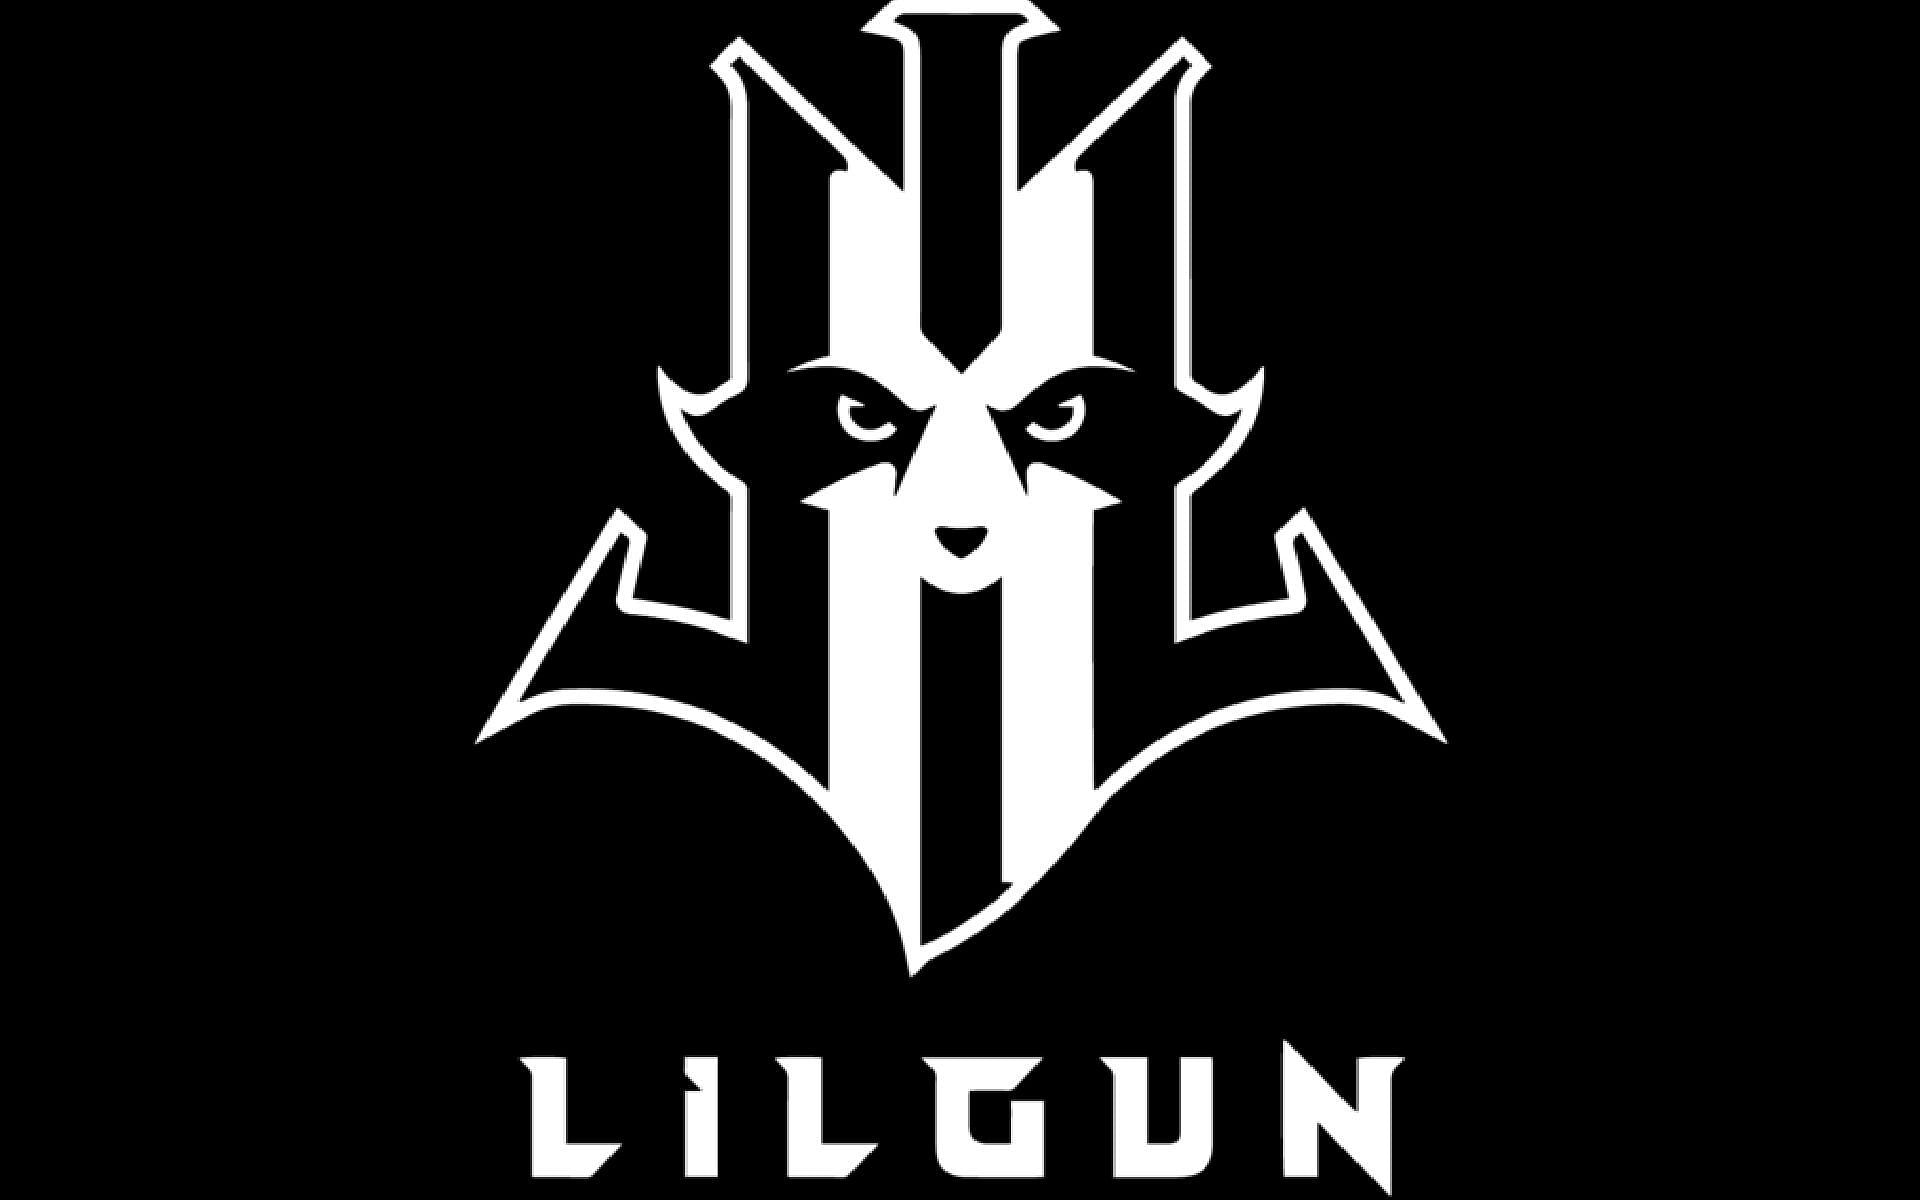 Team Lilgun are considered the dark horse by many (Image via Team Lilgun)